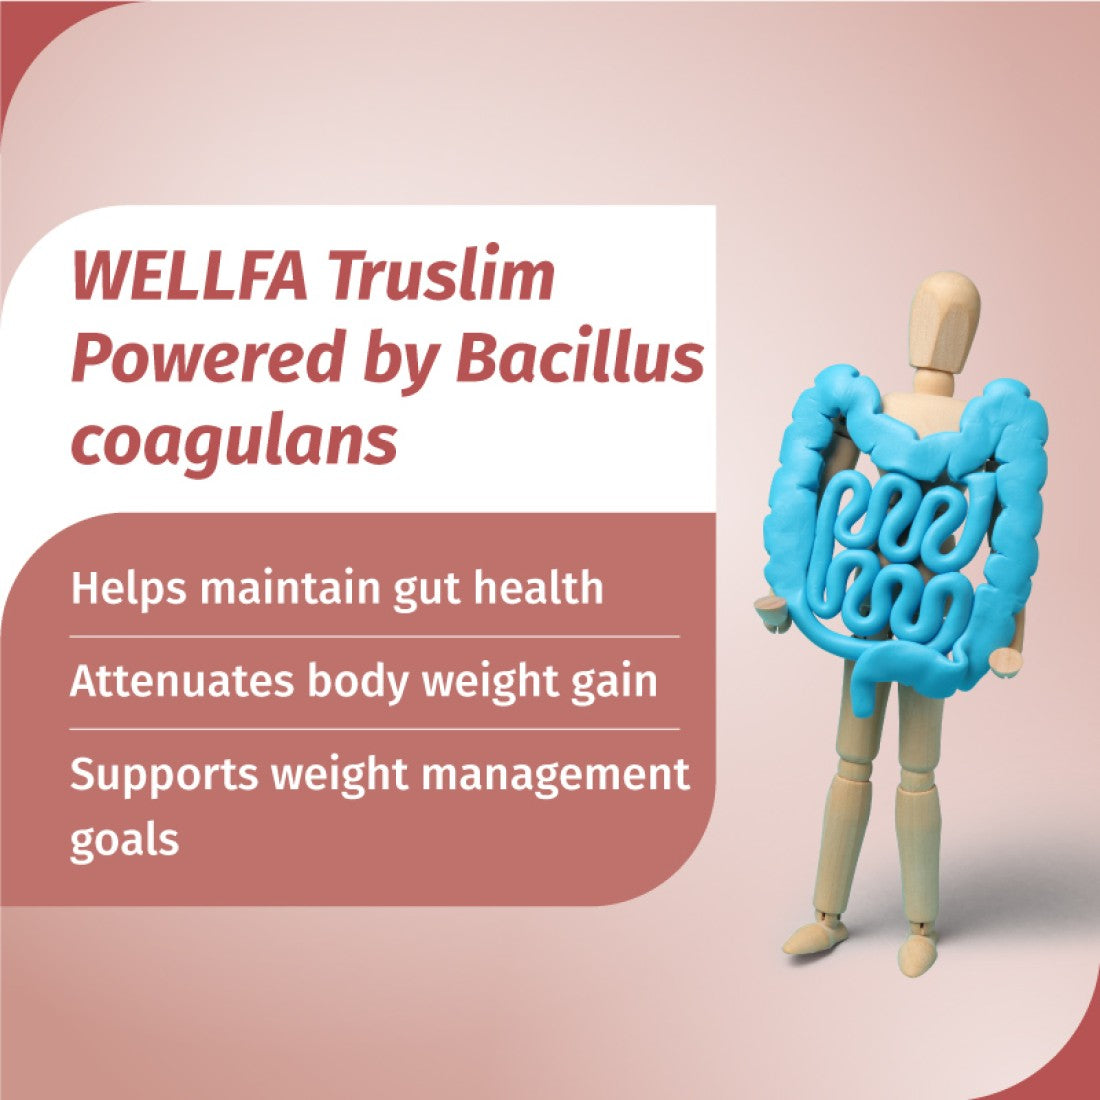 Wellfa Truslim Powered by Bacillus Coagulans